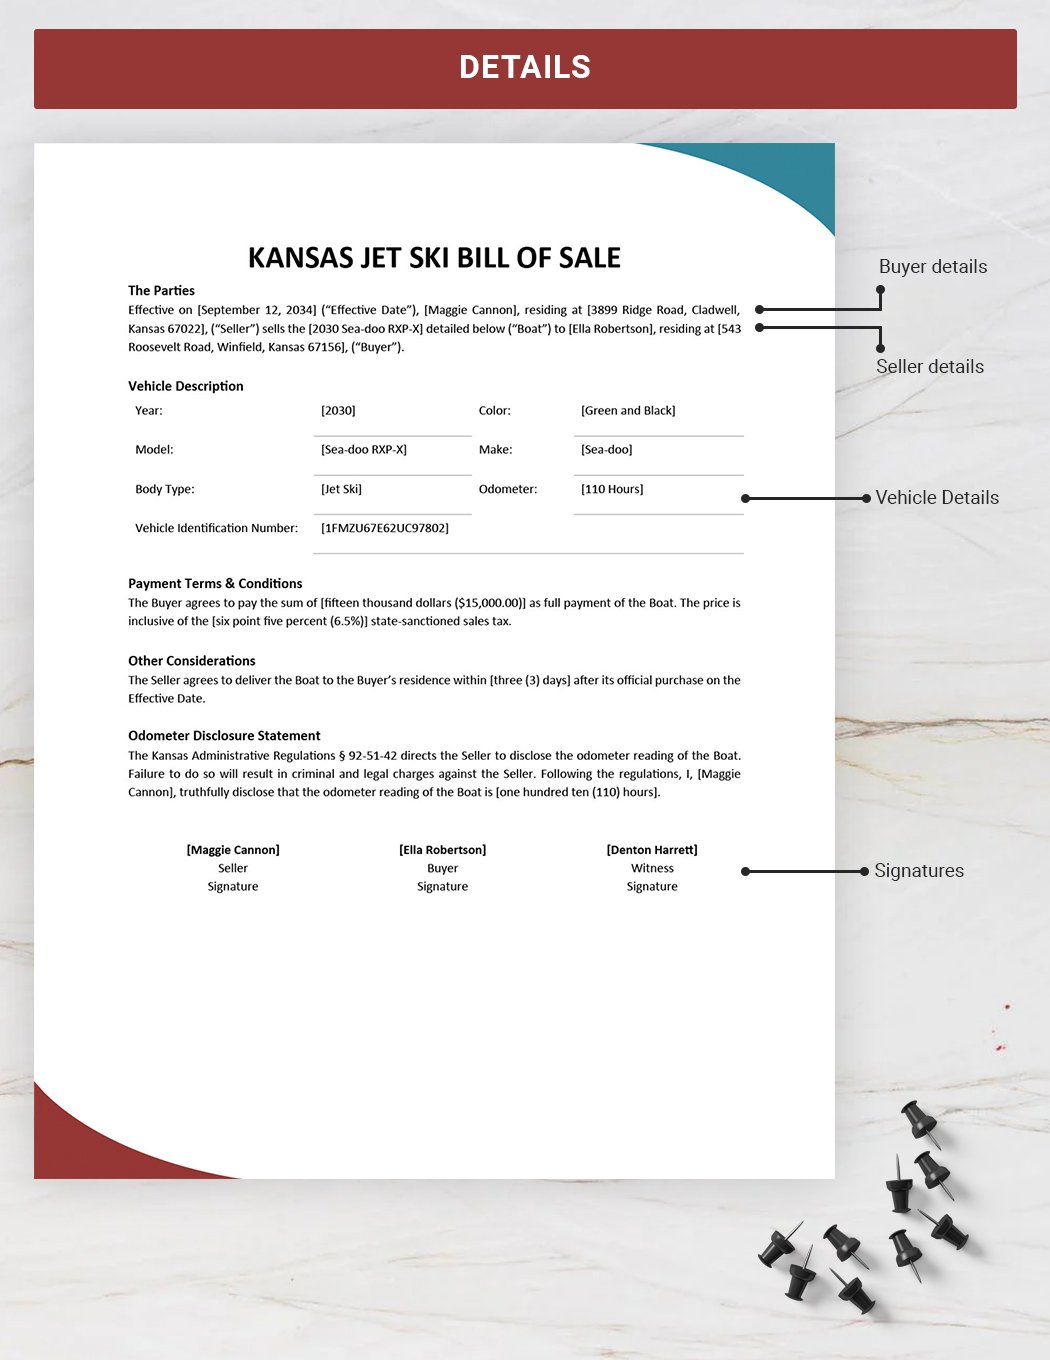 Free Kansas Jet Ski Bill of Sale Form Template Download in Word